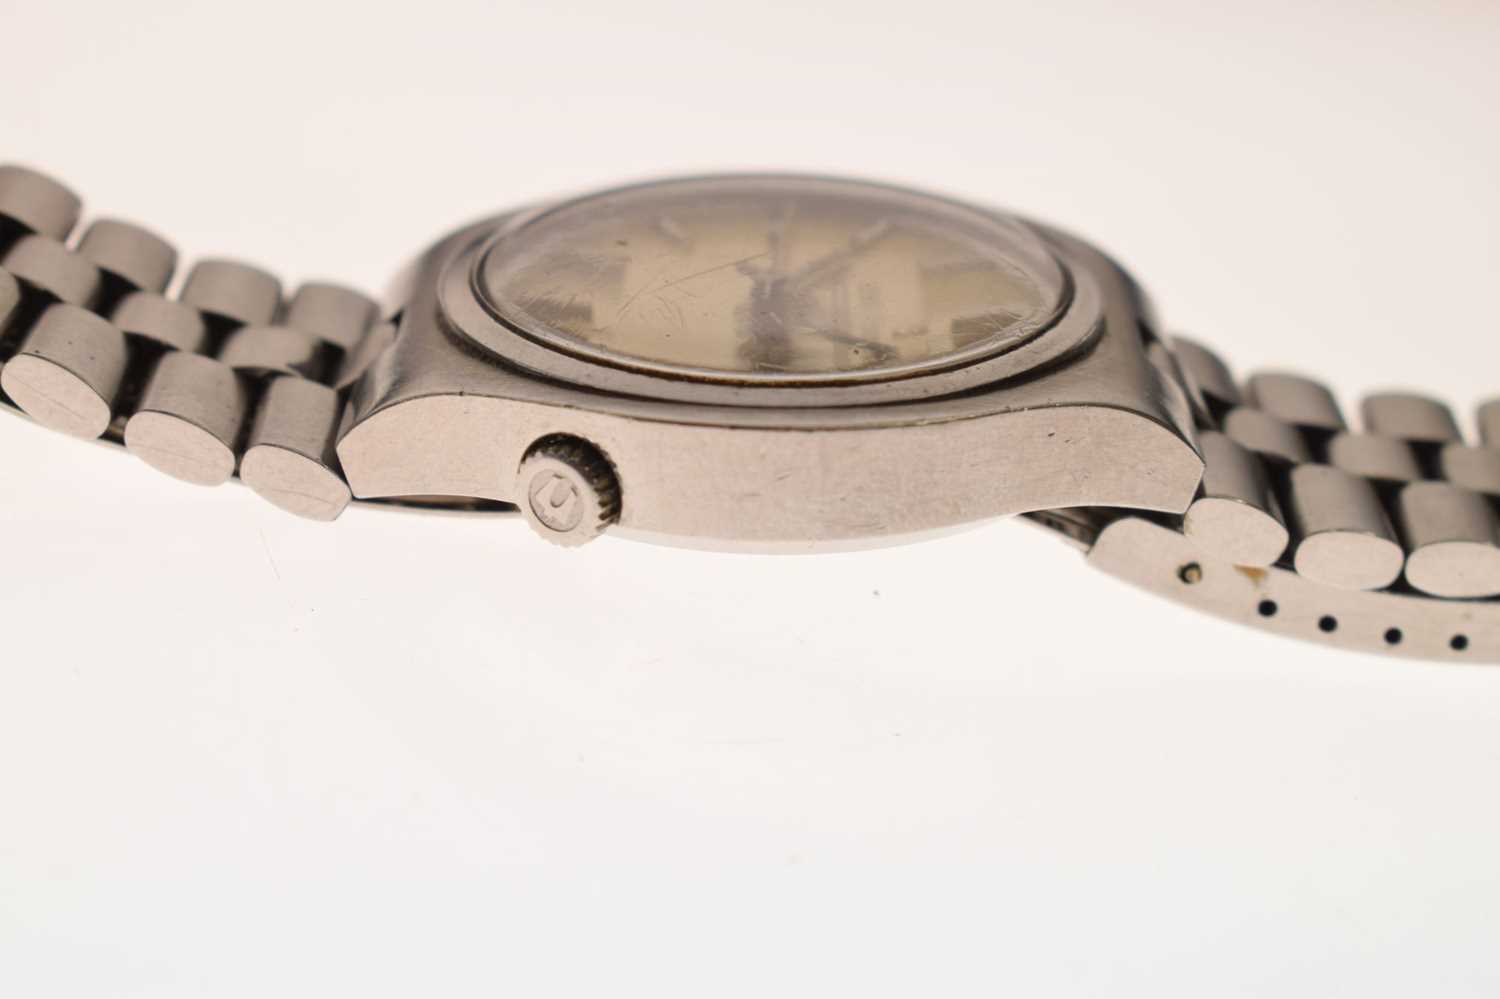 Bulova Accutron - Gentleman's 1970s stainless steel bracelet watch - Image 4 of 9